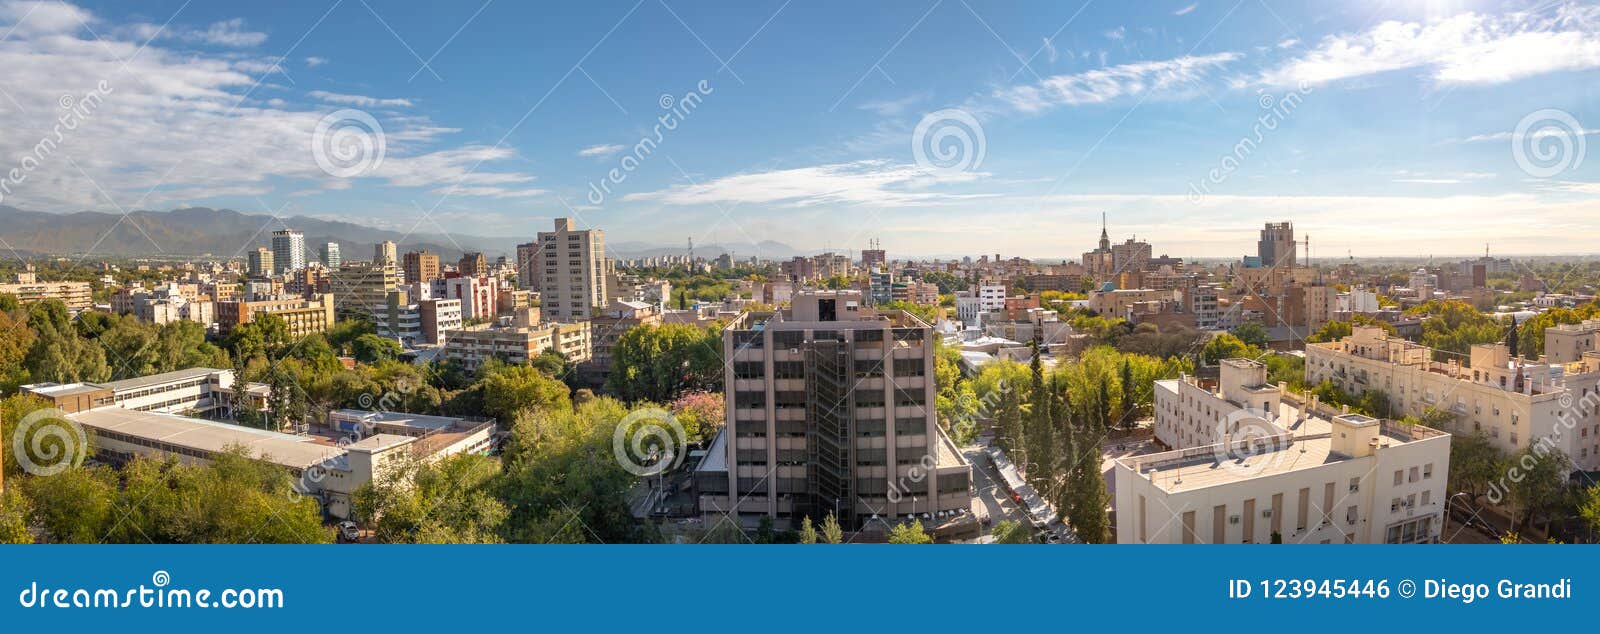 panoramic aerial view of mendoza city - mendoza, argentina